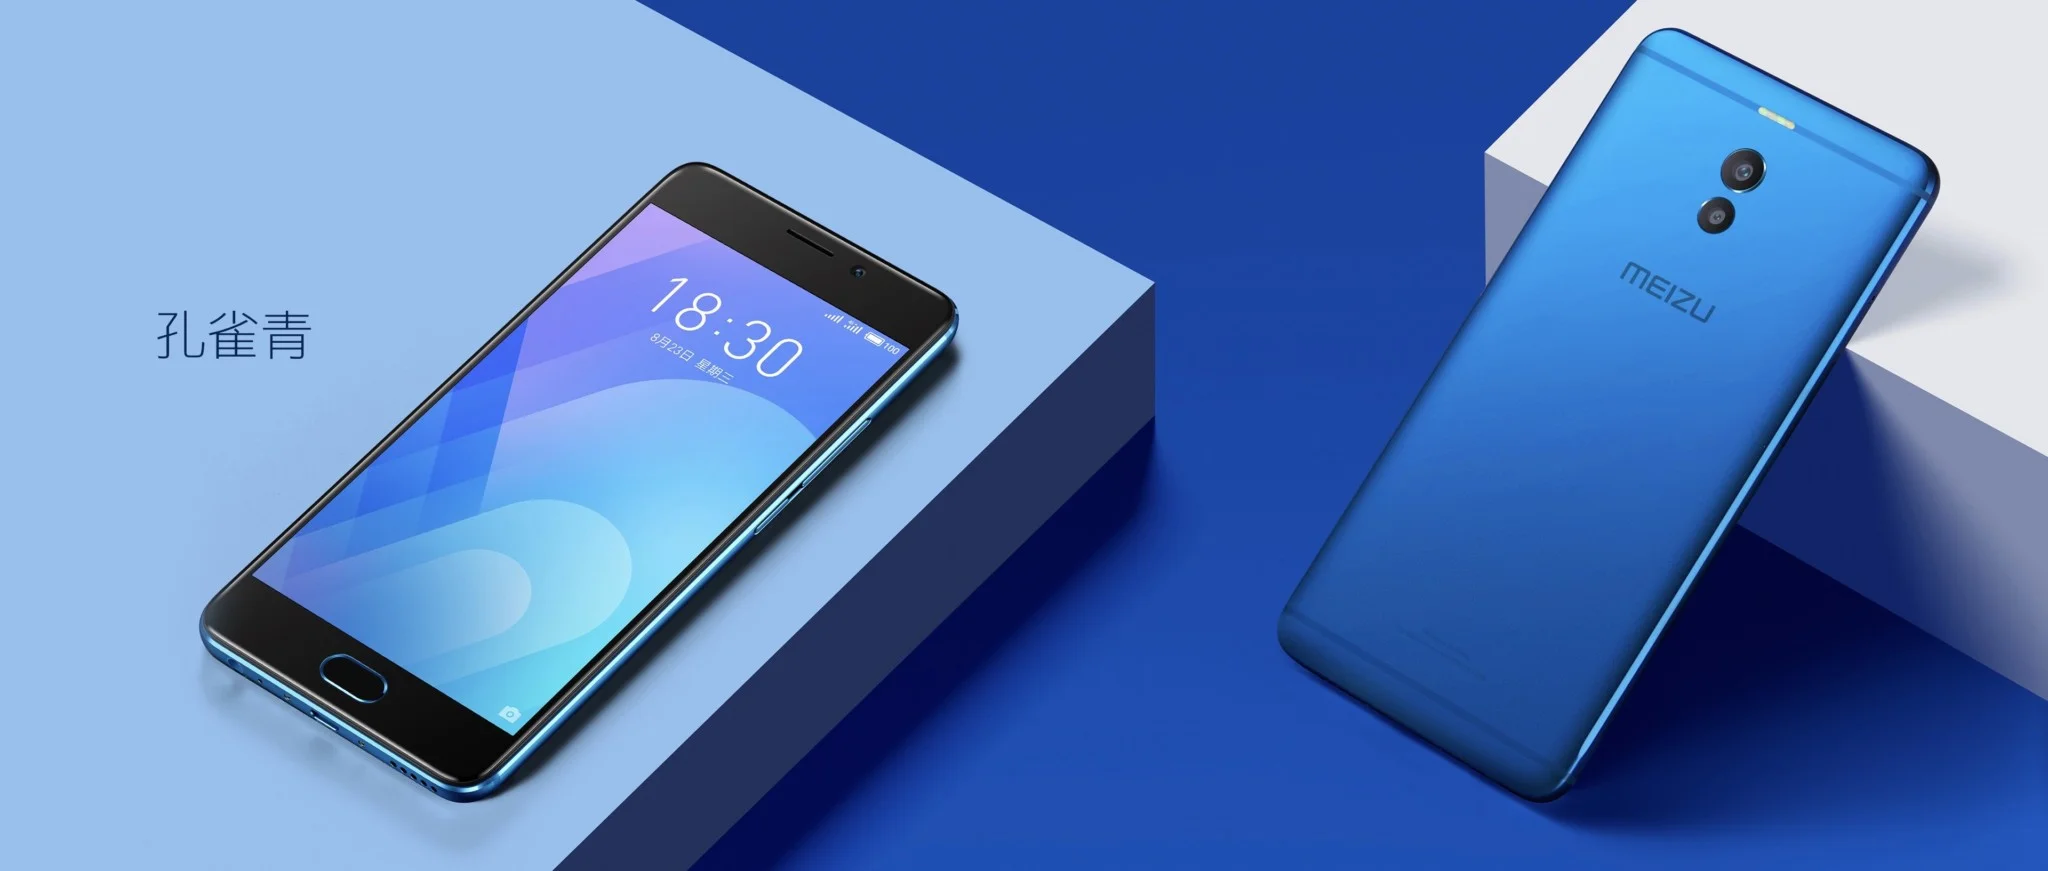 Meizu представила фаблет M6 Note в один день с Samsung Galaxy Note 8 - фото 1